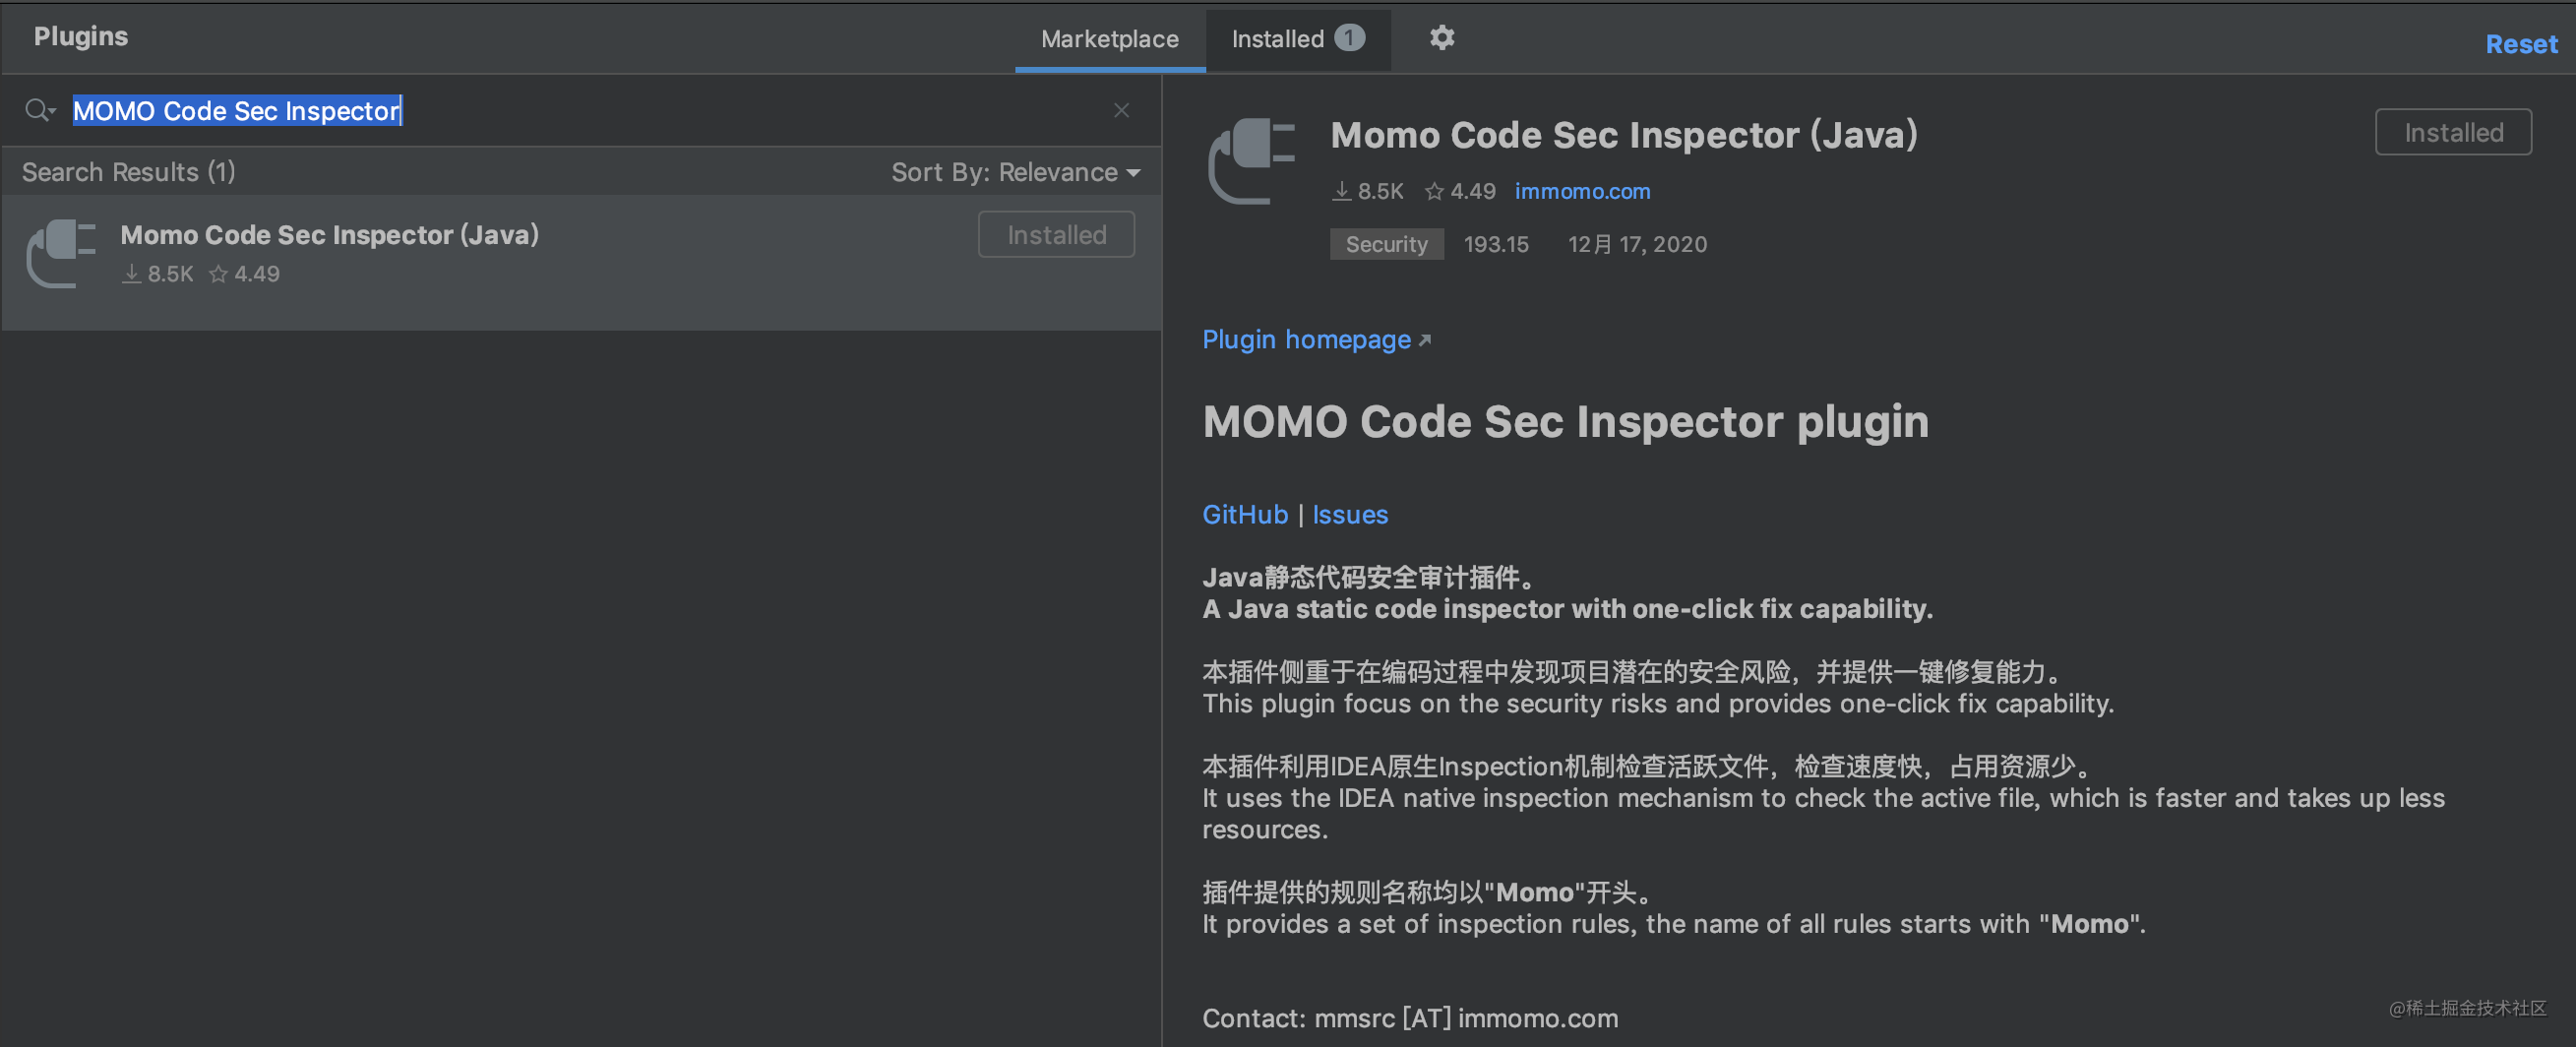 MOMO Code Sec Inspector